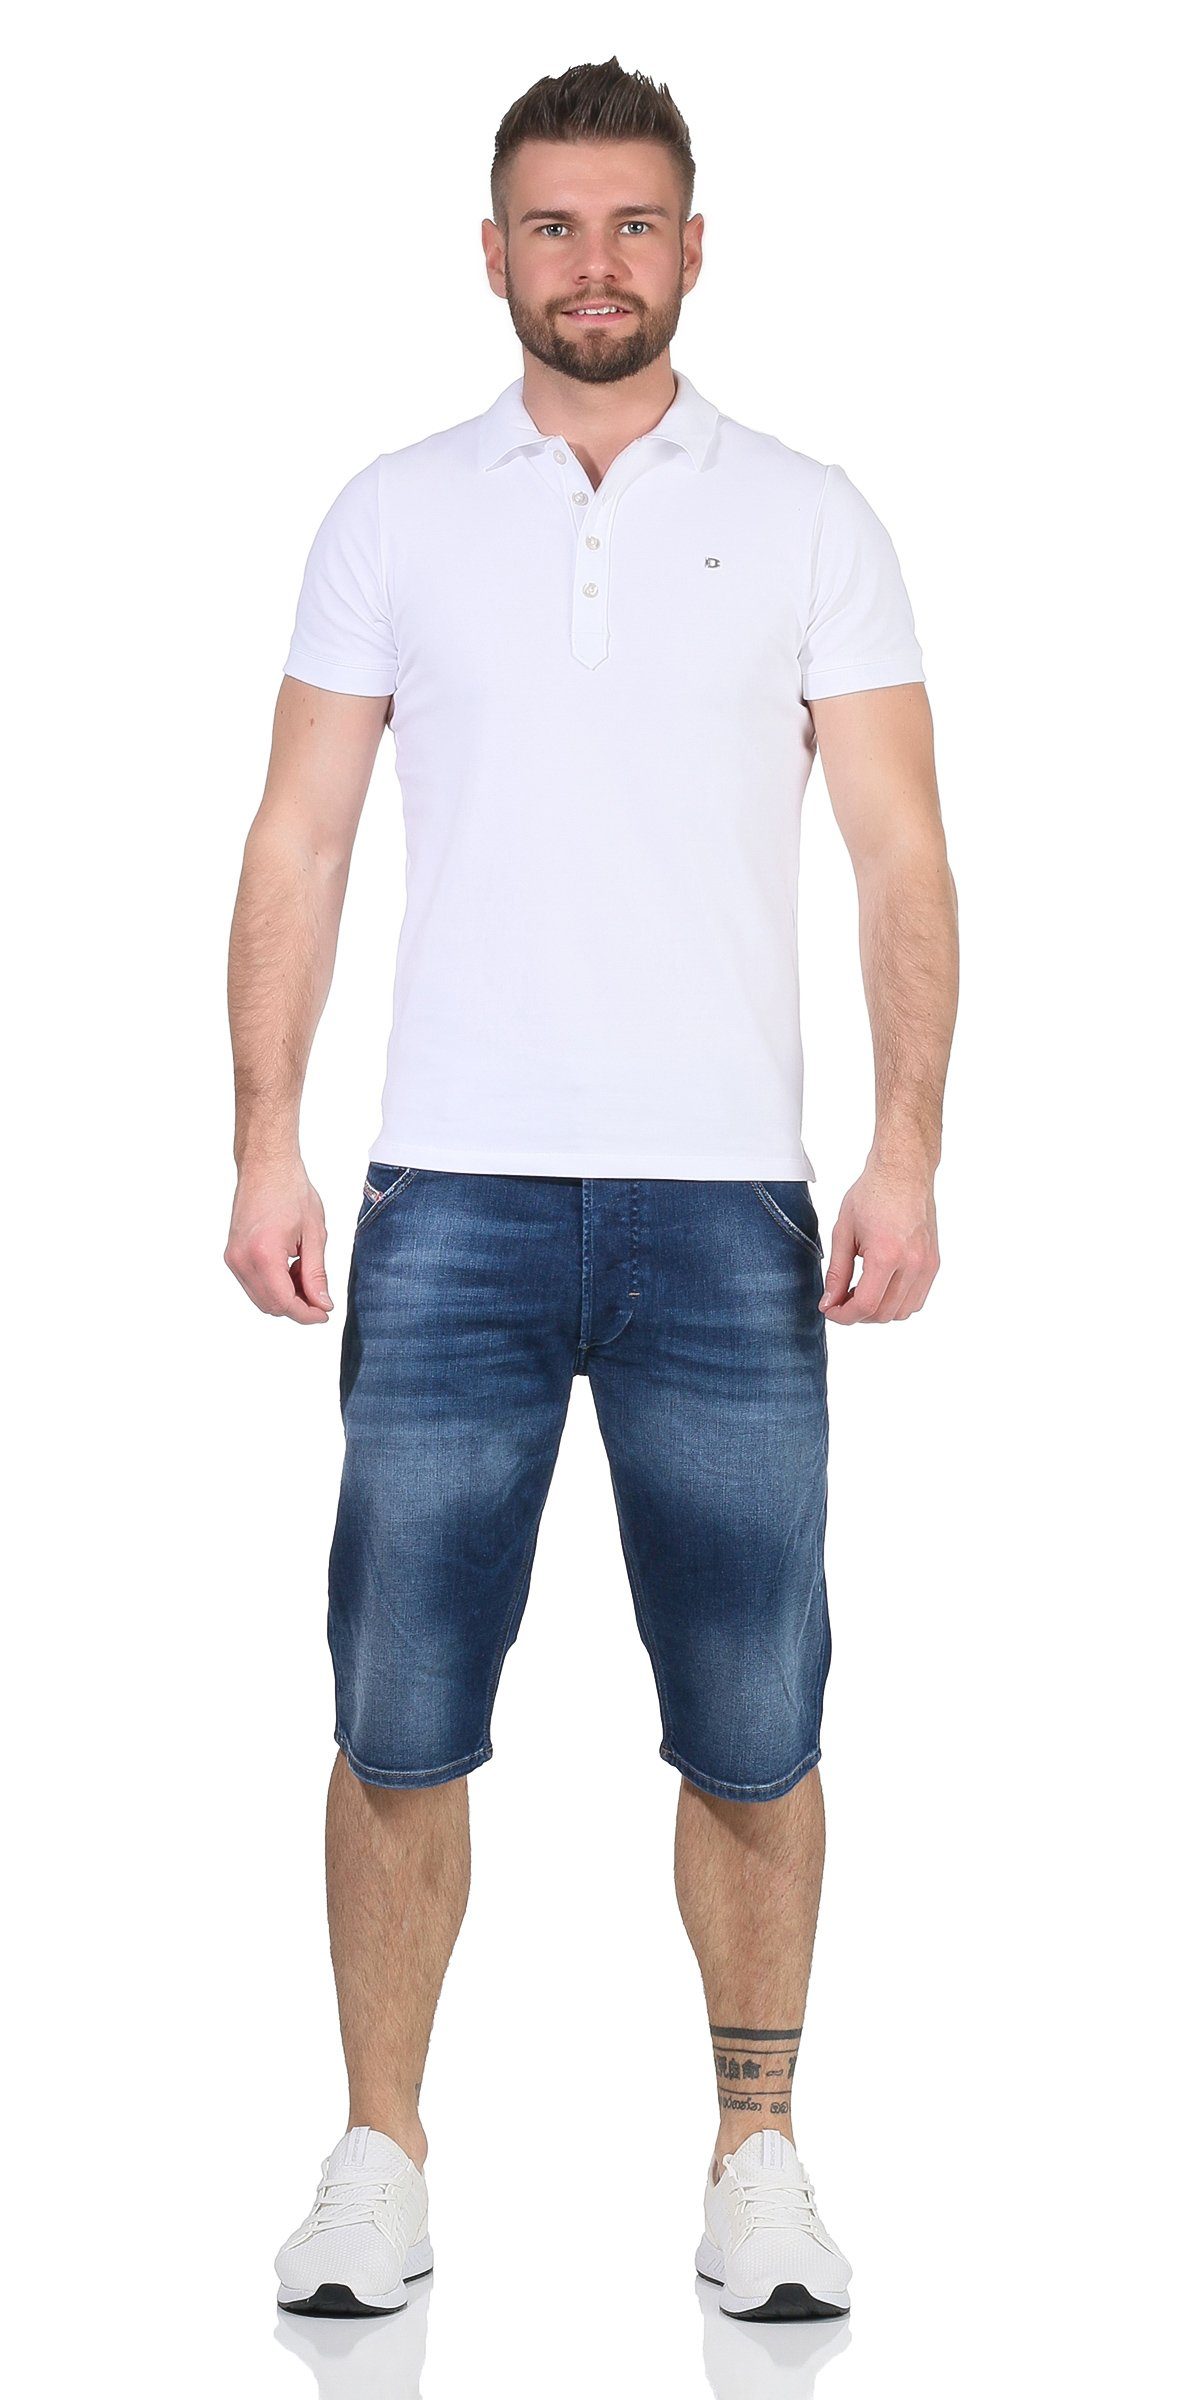 Diesel Jeansshorts Herren Jeans Shorts Hose dezenter RG48R Blau Used-Look Shorts, Kroshort RG48R kurze